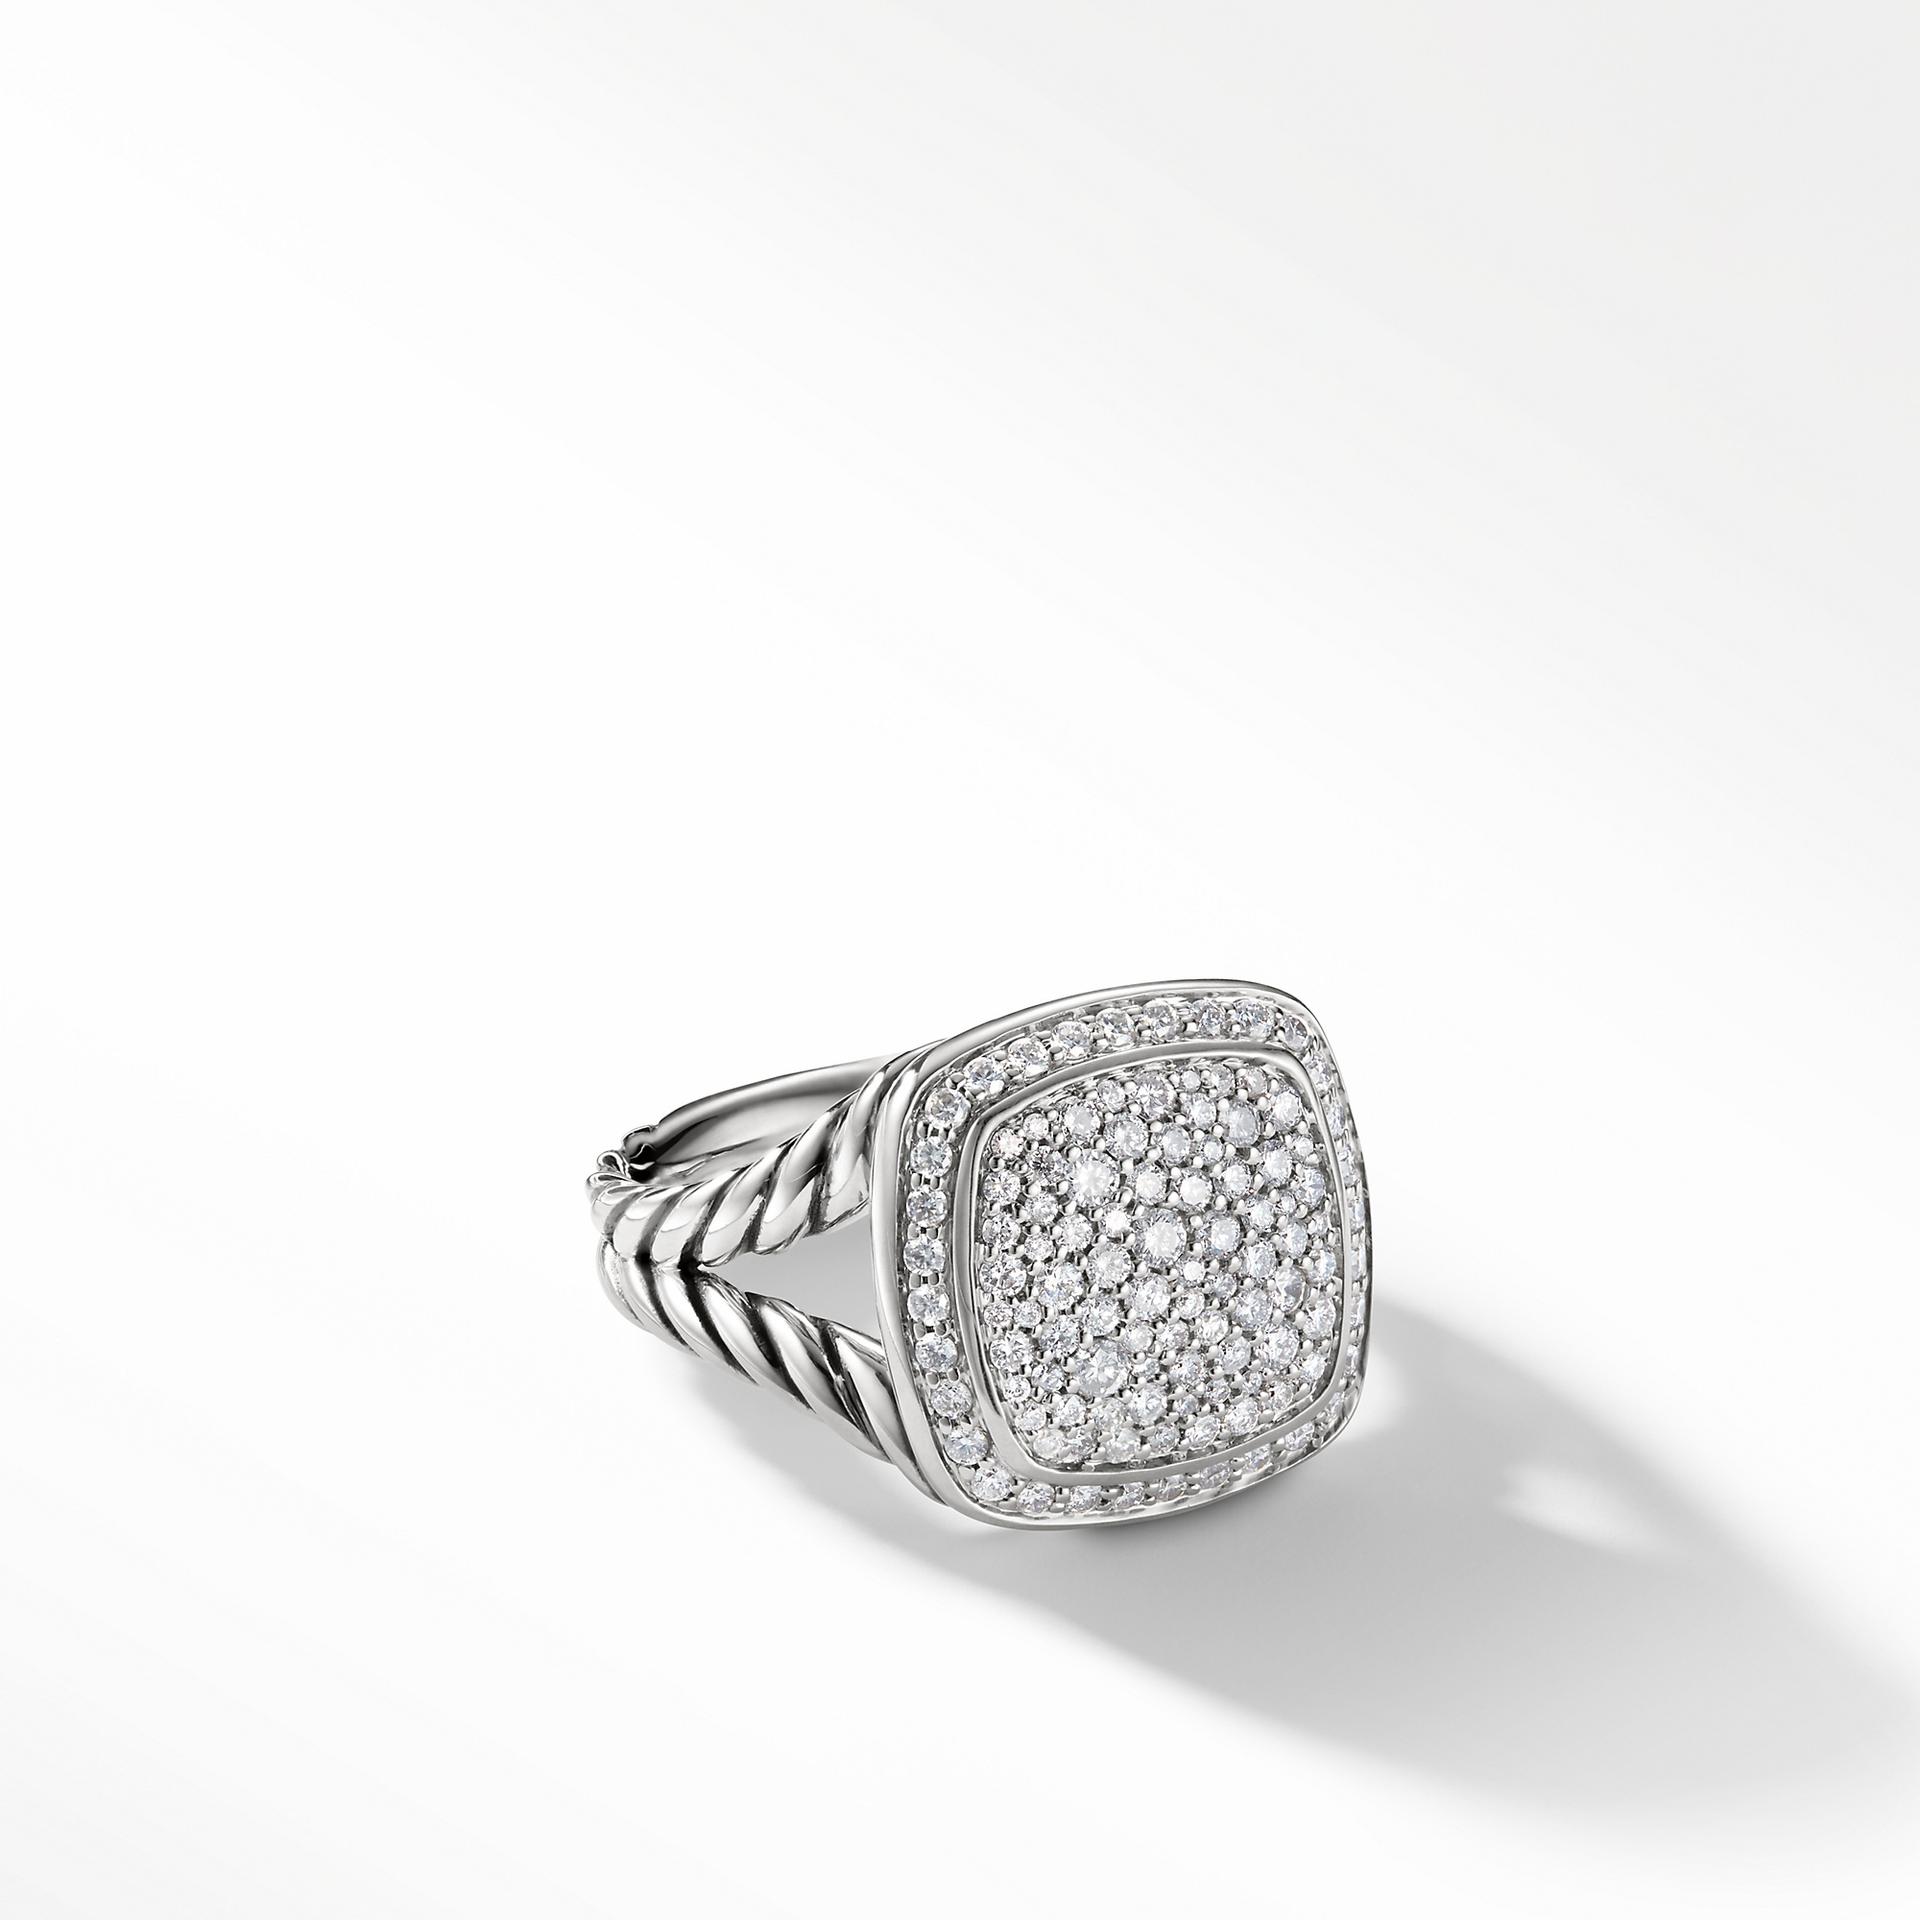 David Yurman 11mm Albion Ring with Diamonds, size 6 0